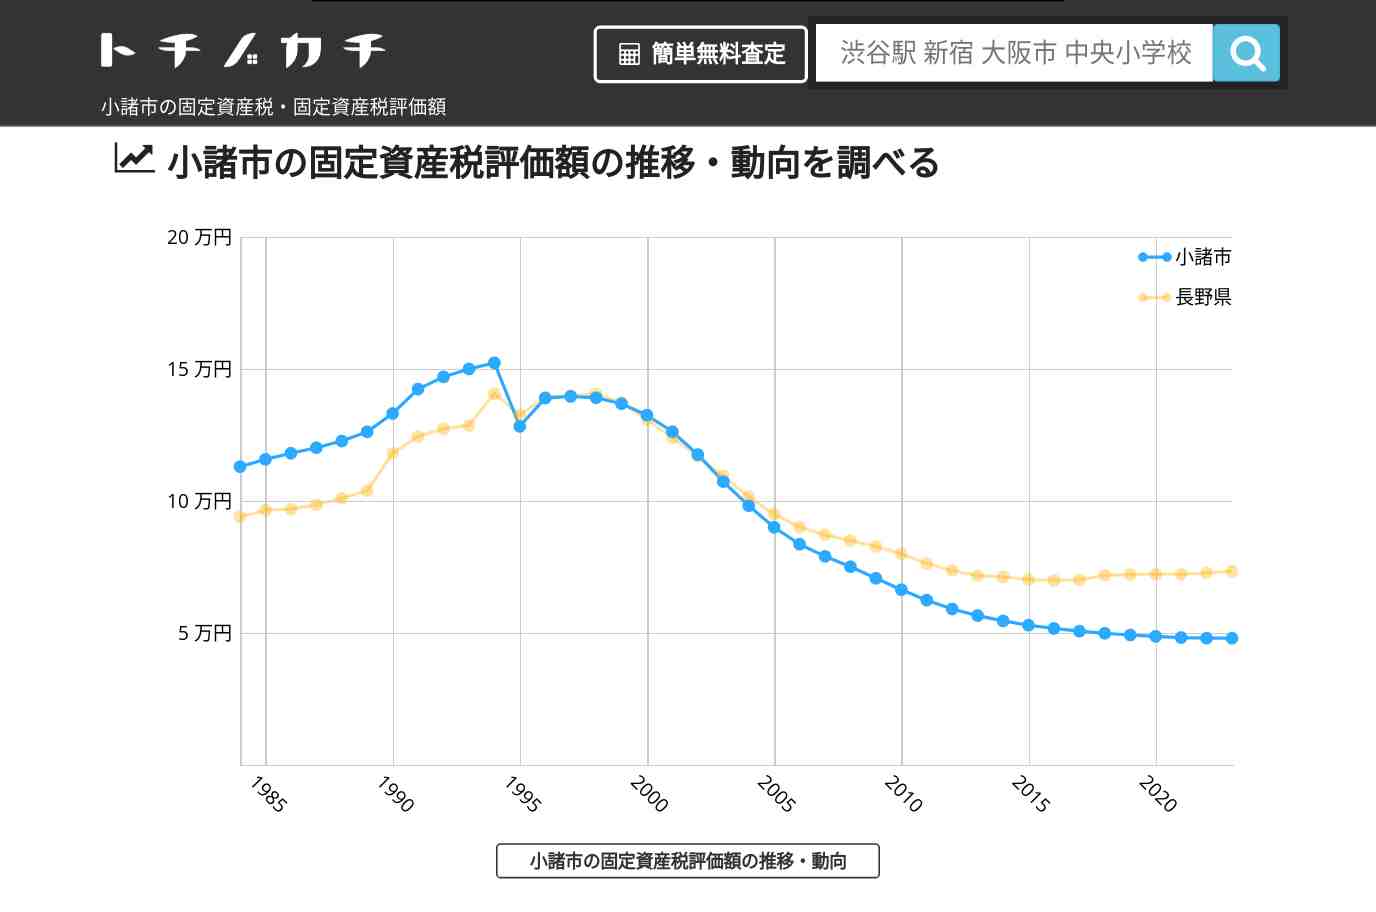 水明小学校(長野県 小諸市)周辺の固定資産税・固定資産税評価額 | トチノカチ